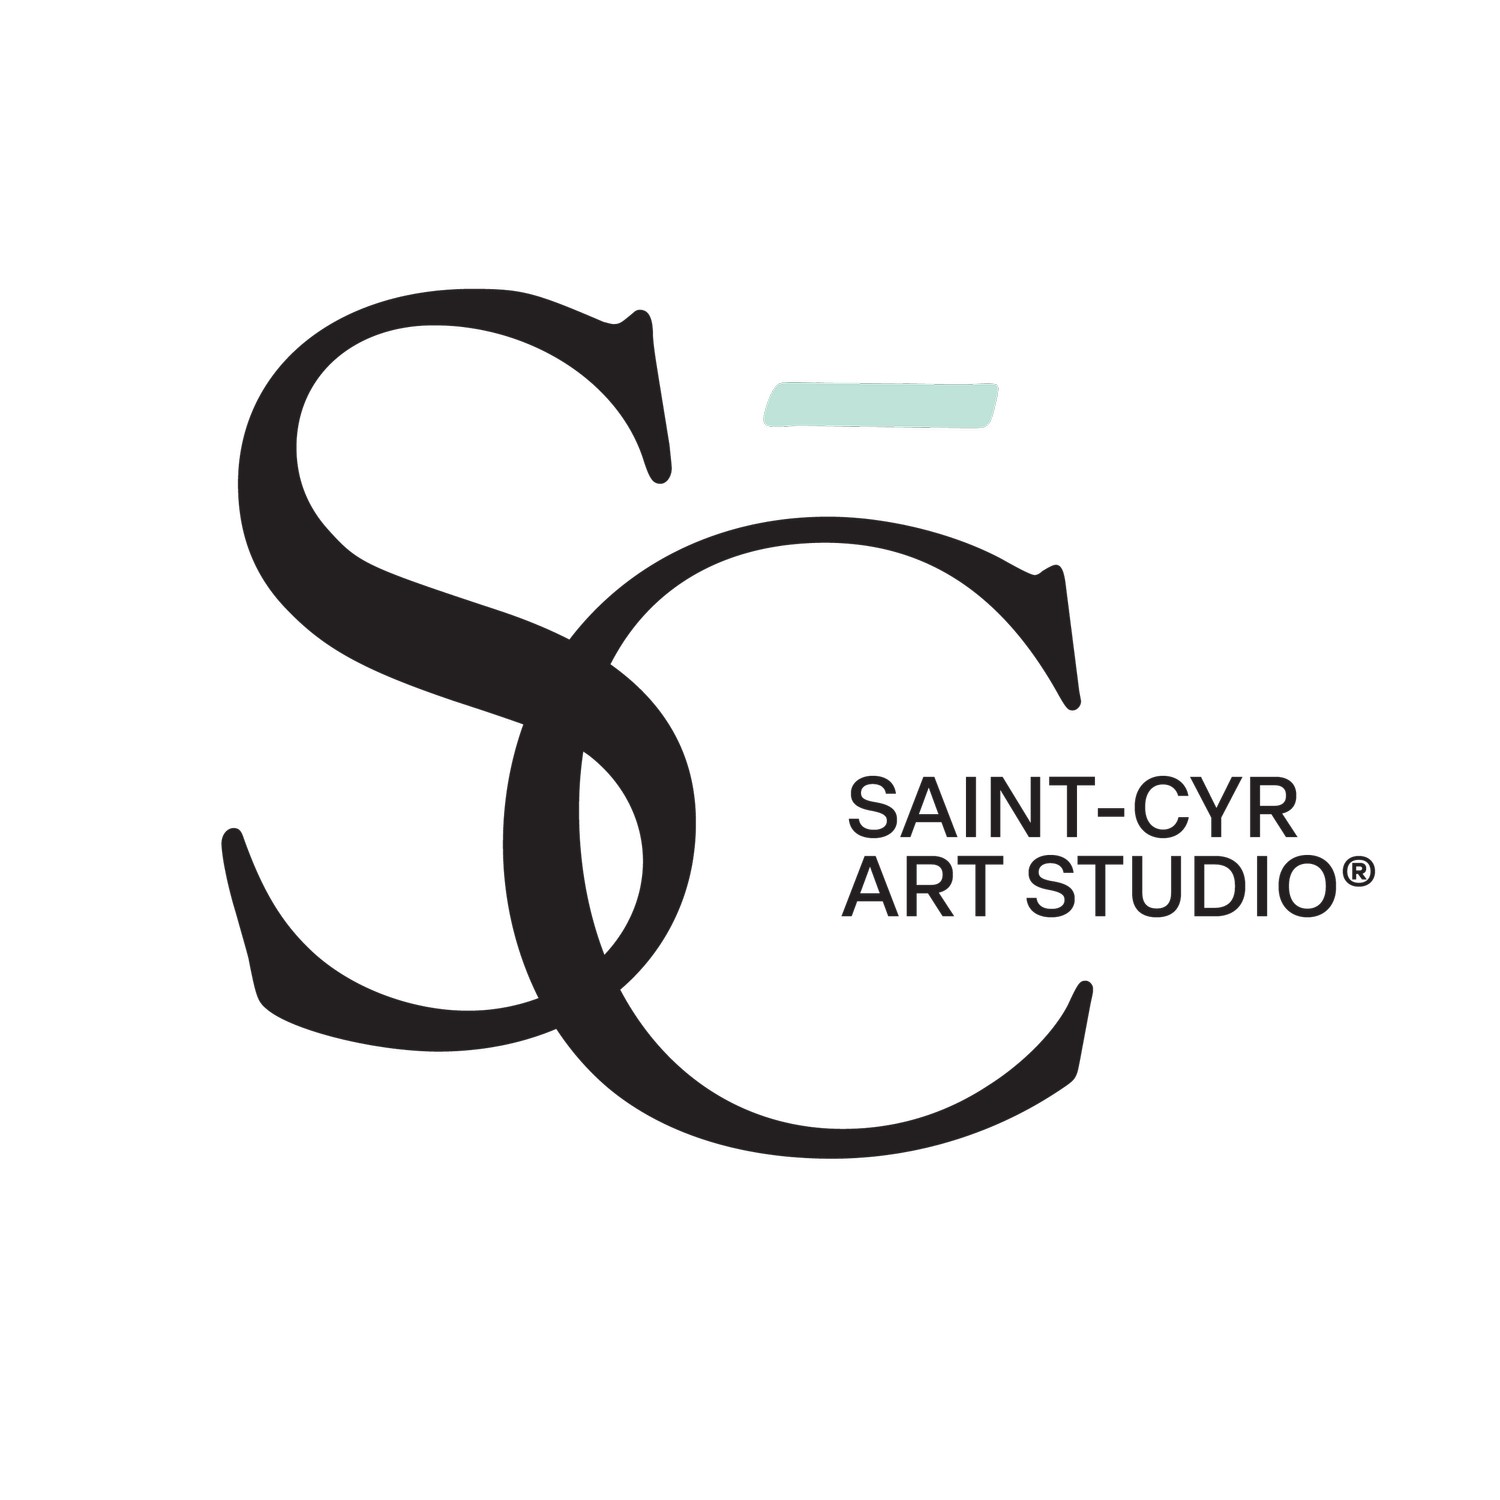 Saint-Cyr Art Studio 